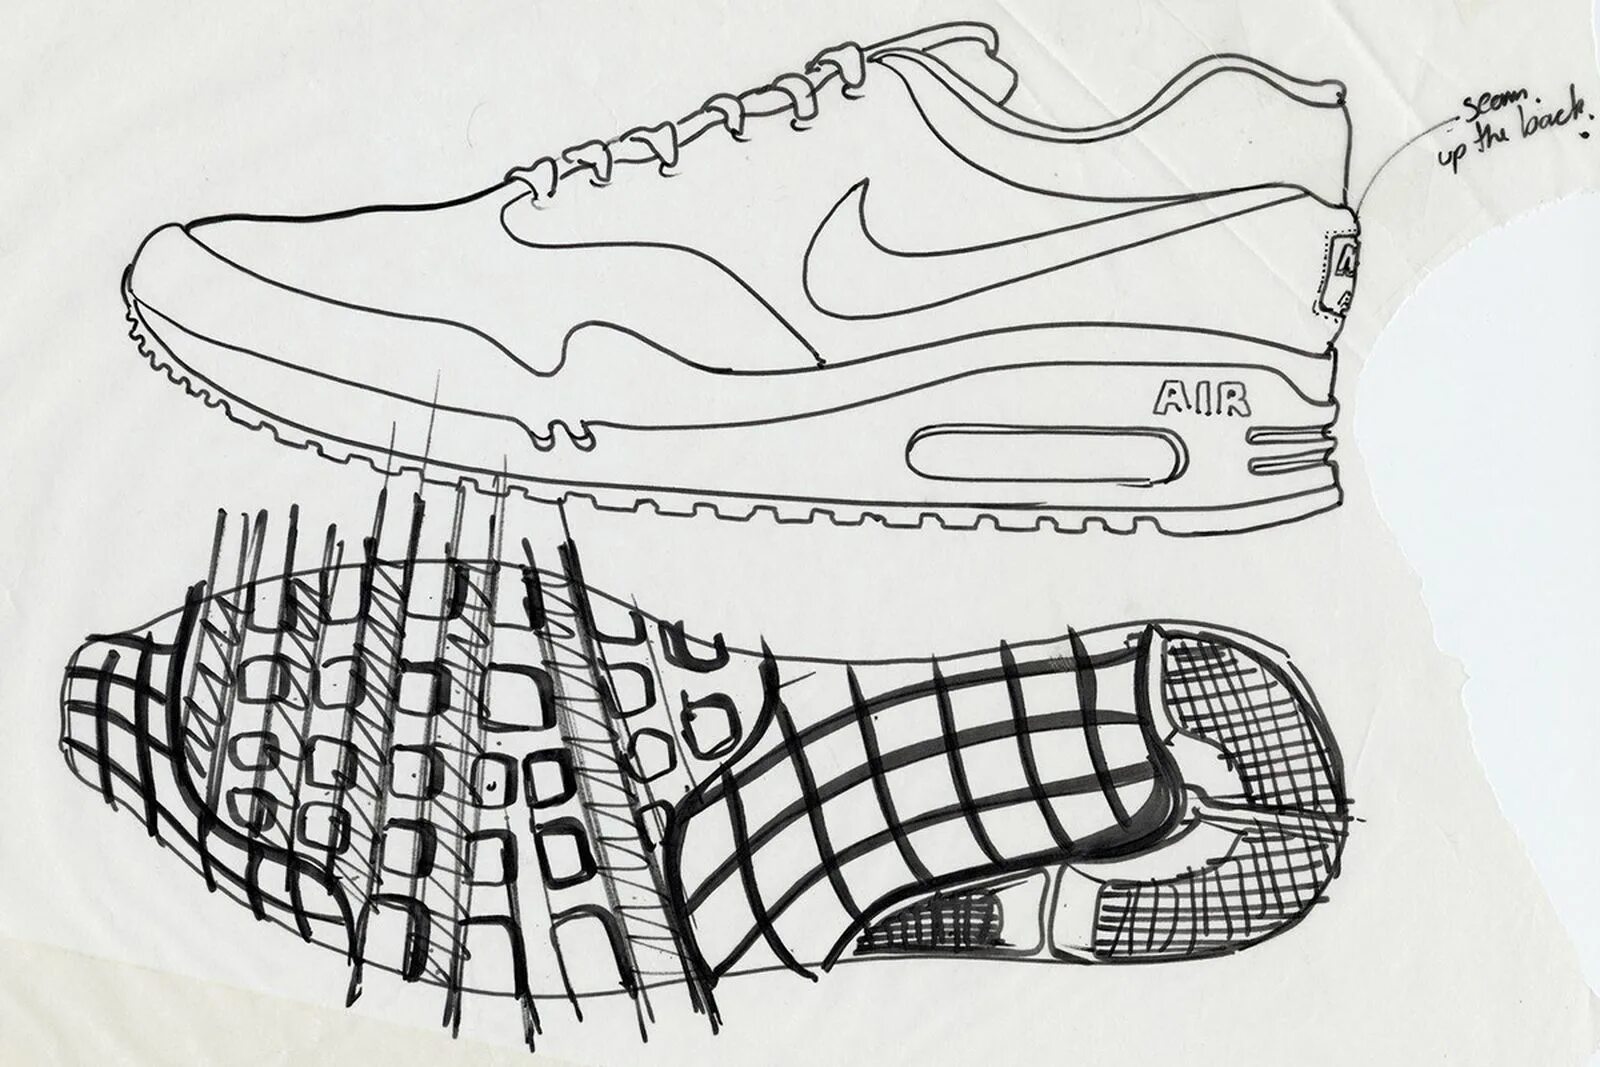 Nike Air Max 95 Sketch. Nike Air Max 1 Sketch to Shelf. Air Max 95 подошва. Подошва найк АИР Макс. Подошва карандаша